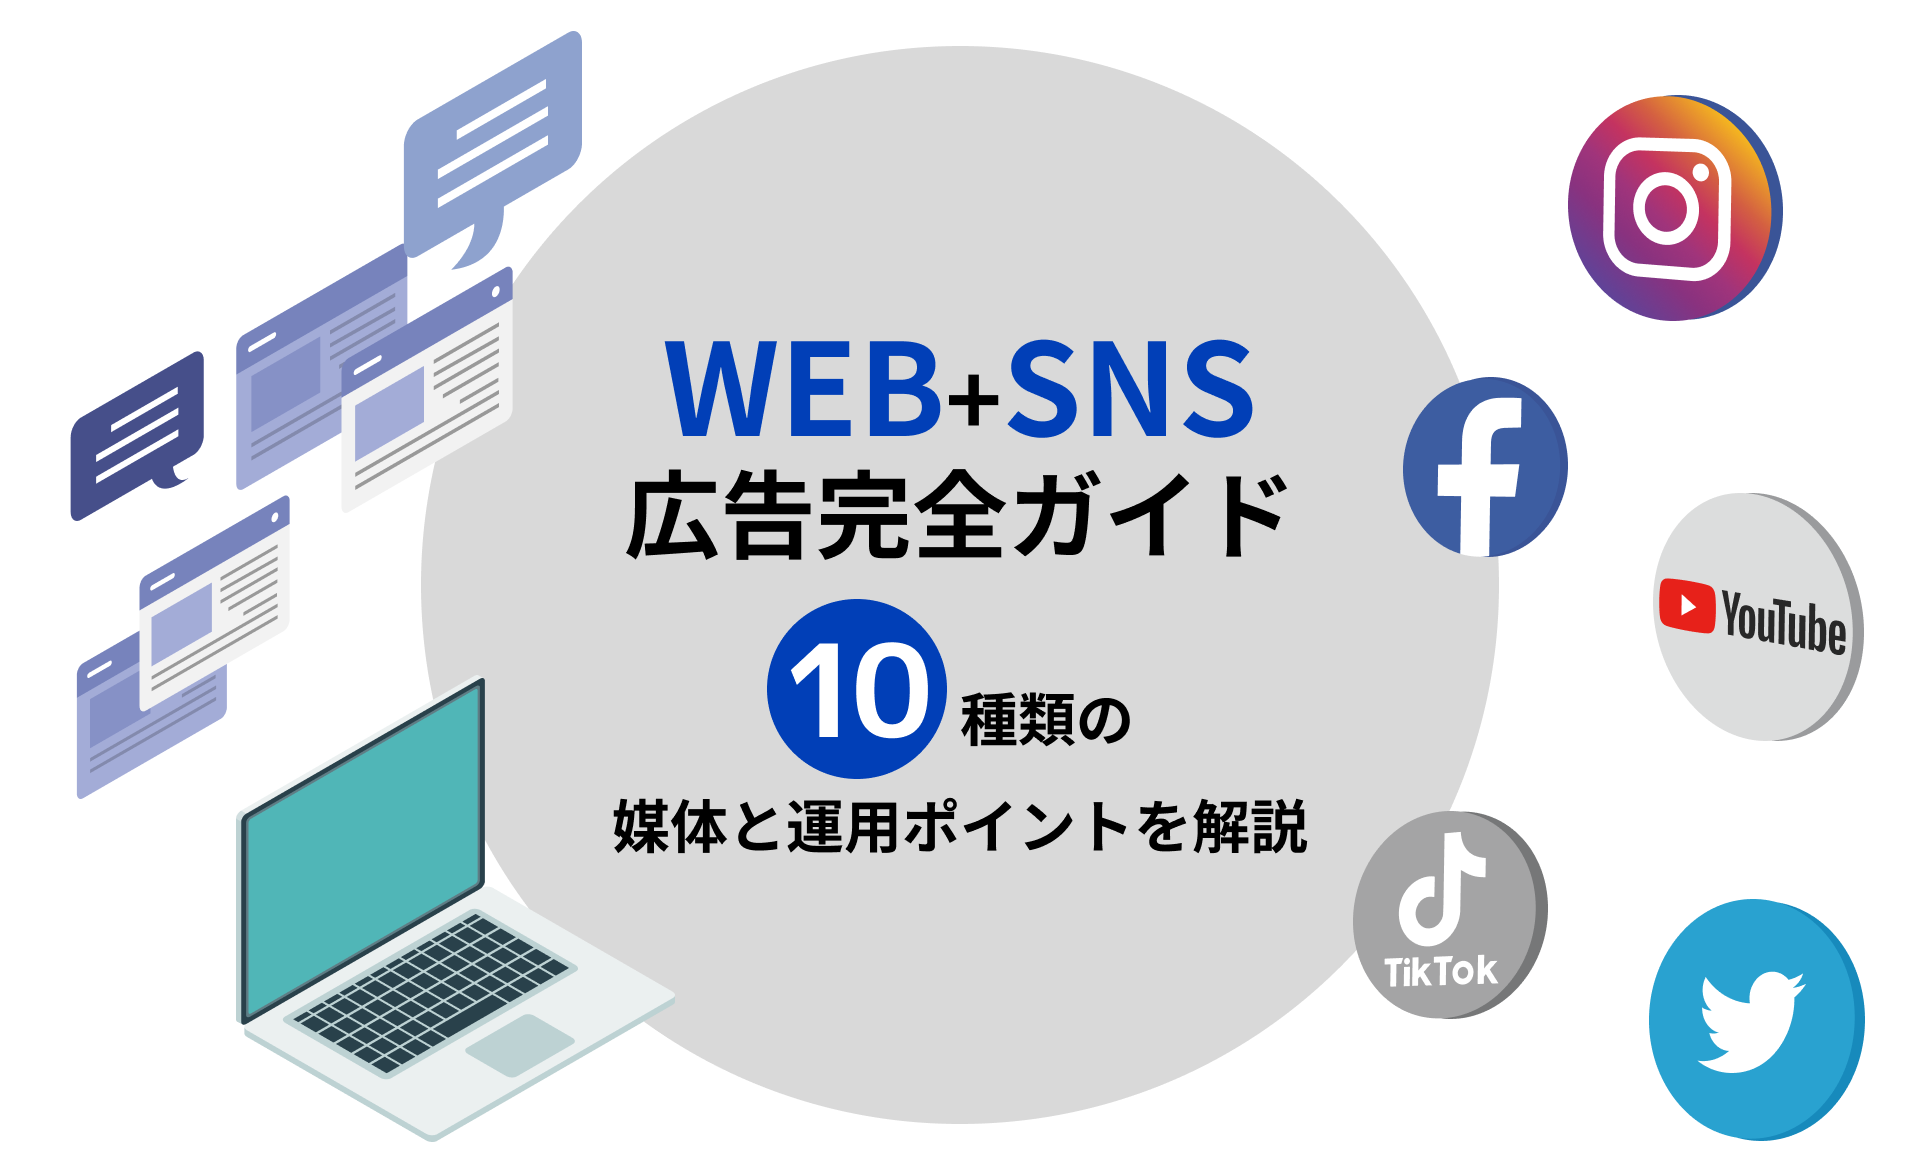 WEB+SNS広告完全ガイド｜10種類の媒体と運用ポイントを解説